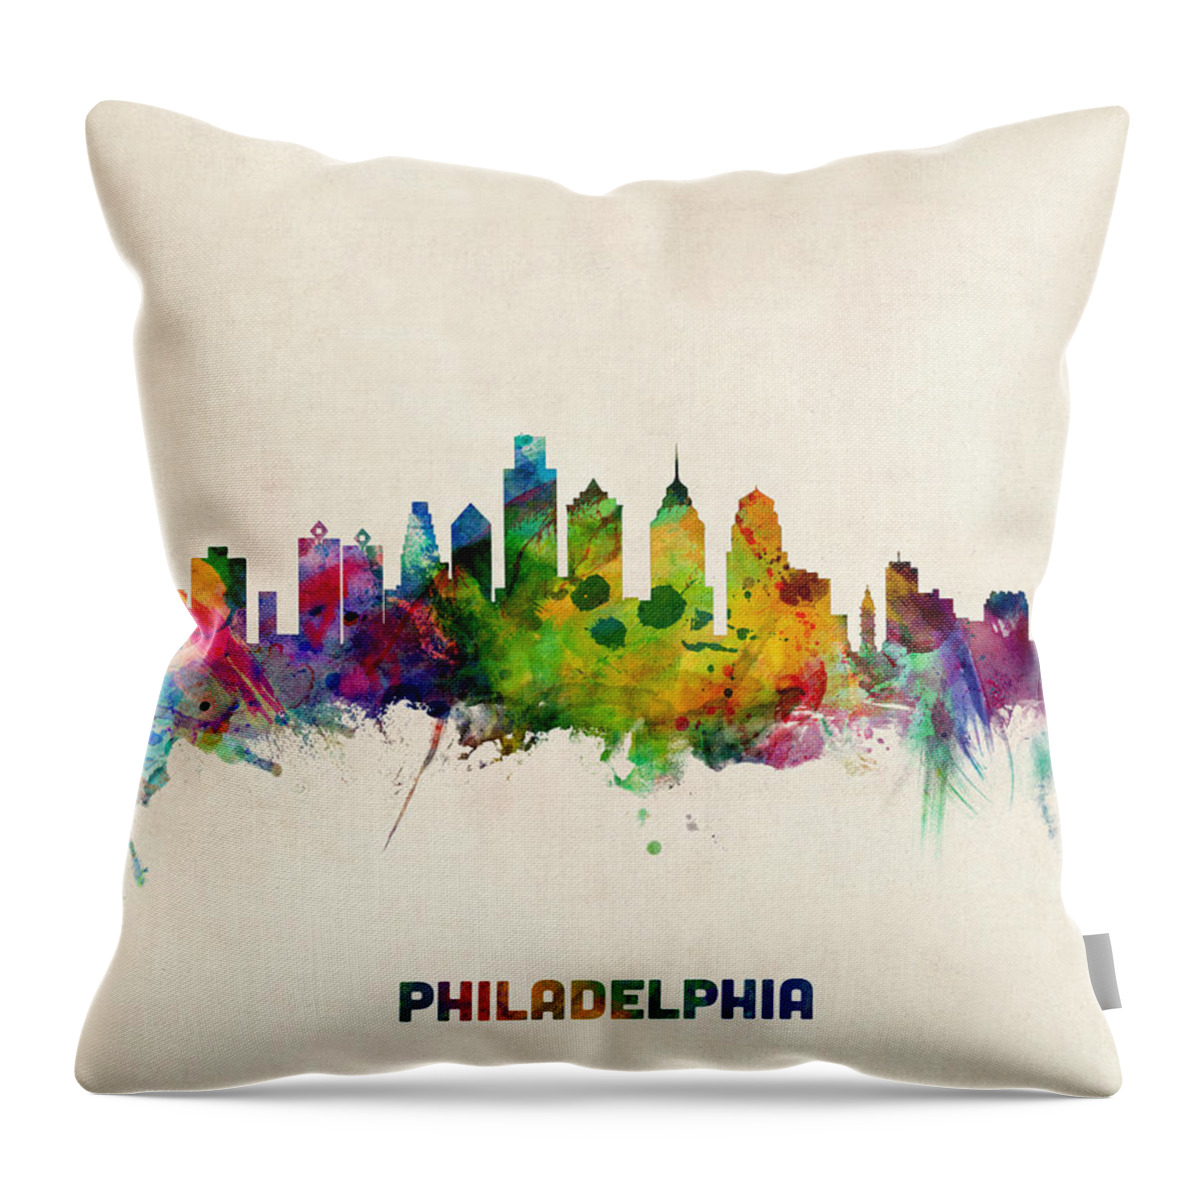 Philadelphia Throw Pillow featuring the digital art Philadelphia Pennsylvania Skyline #26 by Michael Tompsett